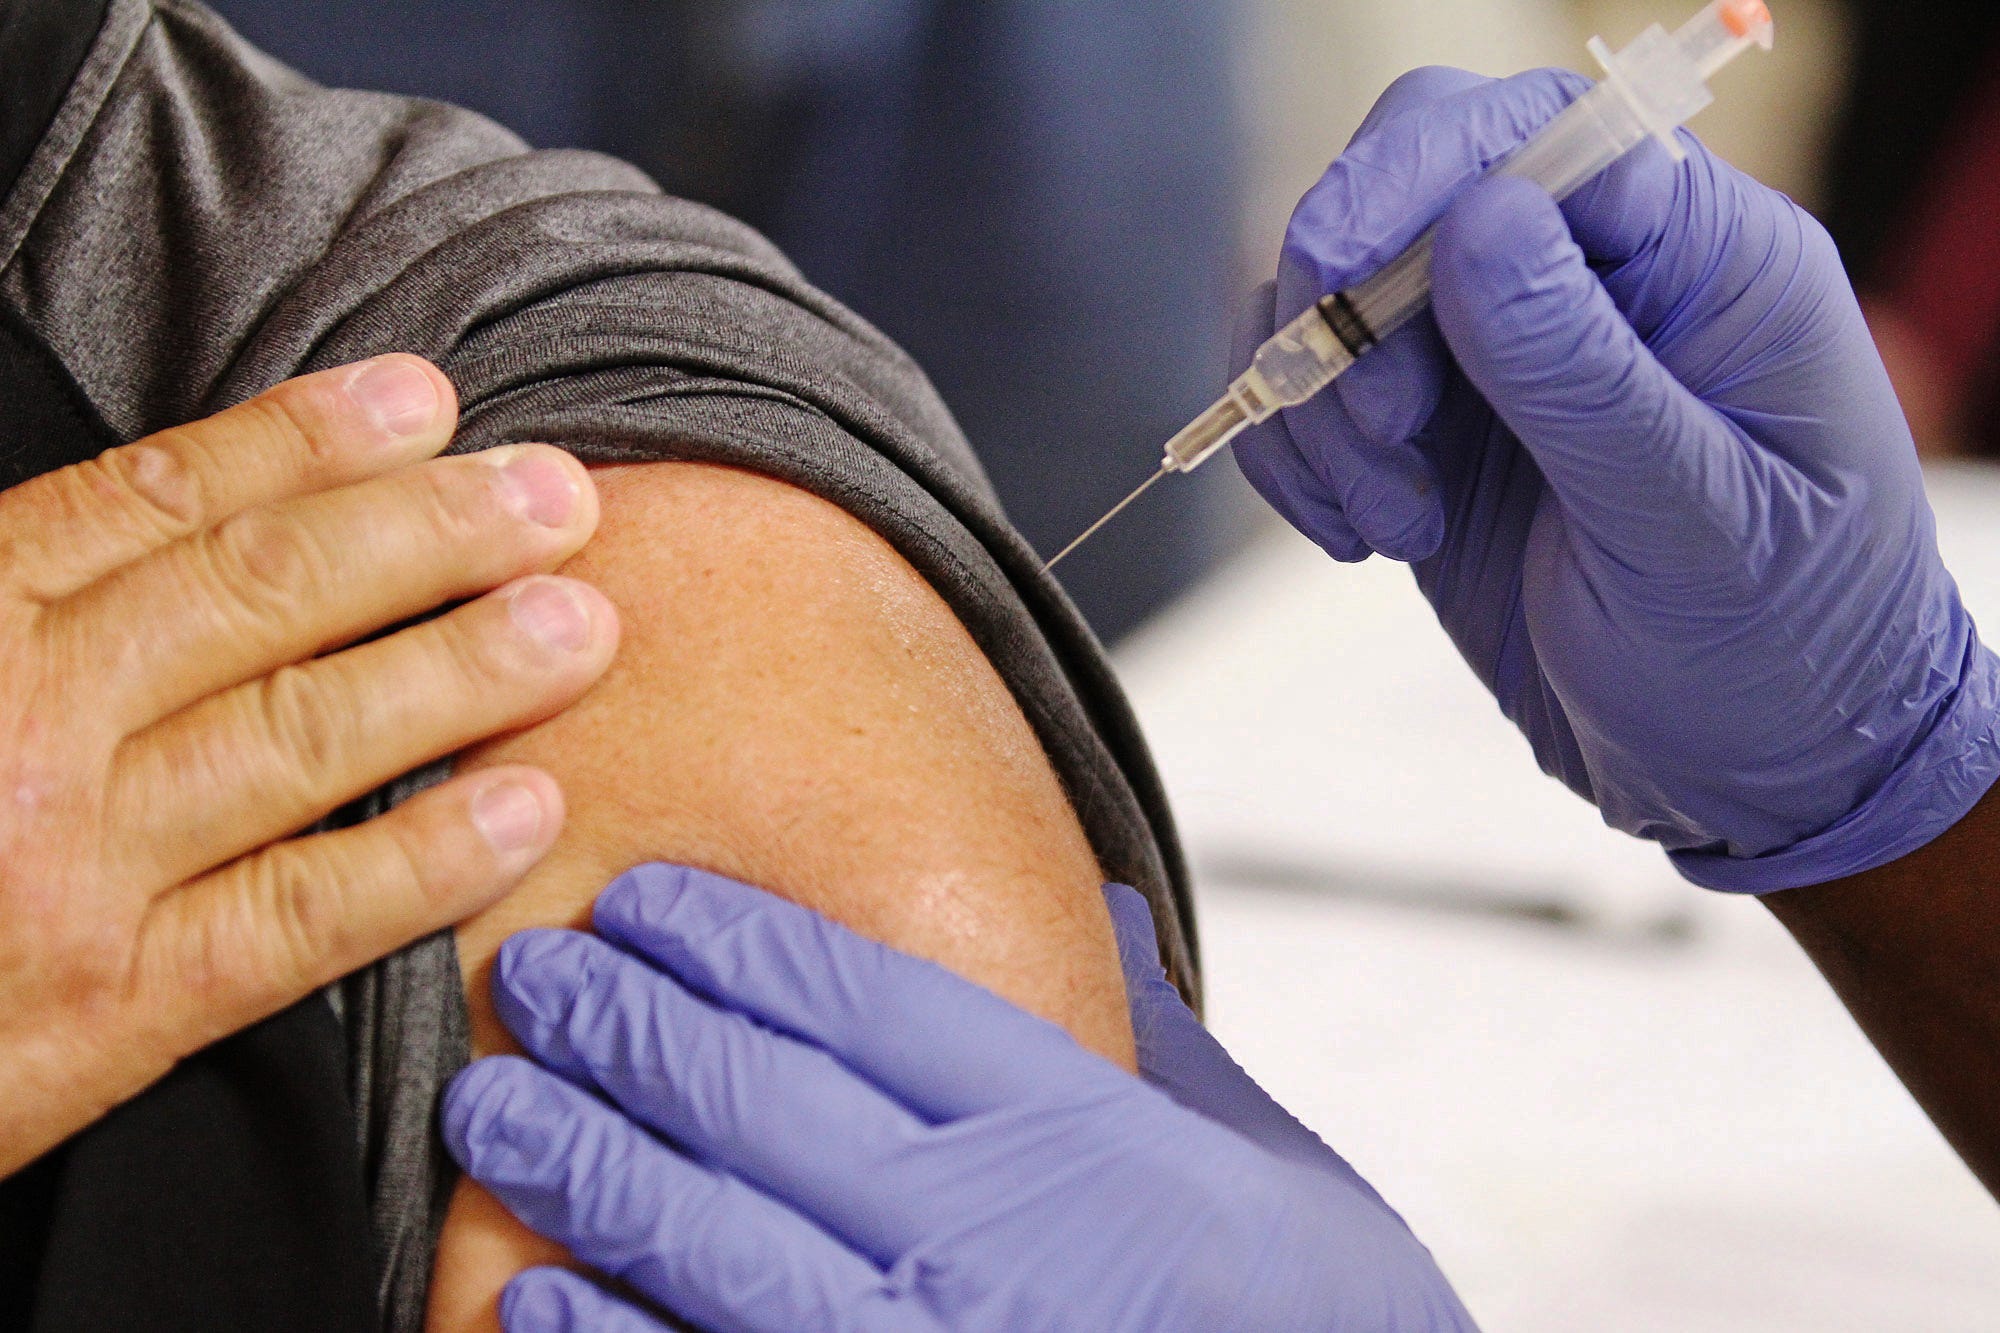 Department of Health: Flu now 'widespread' in Ohio